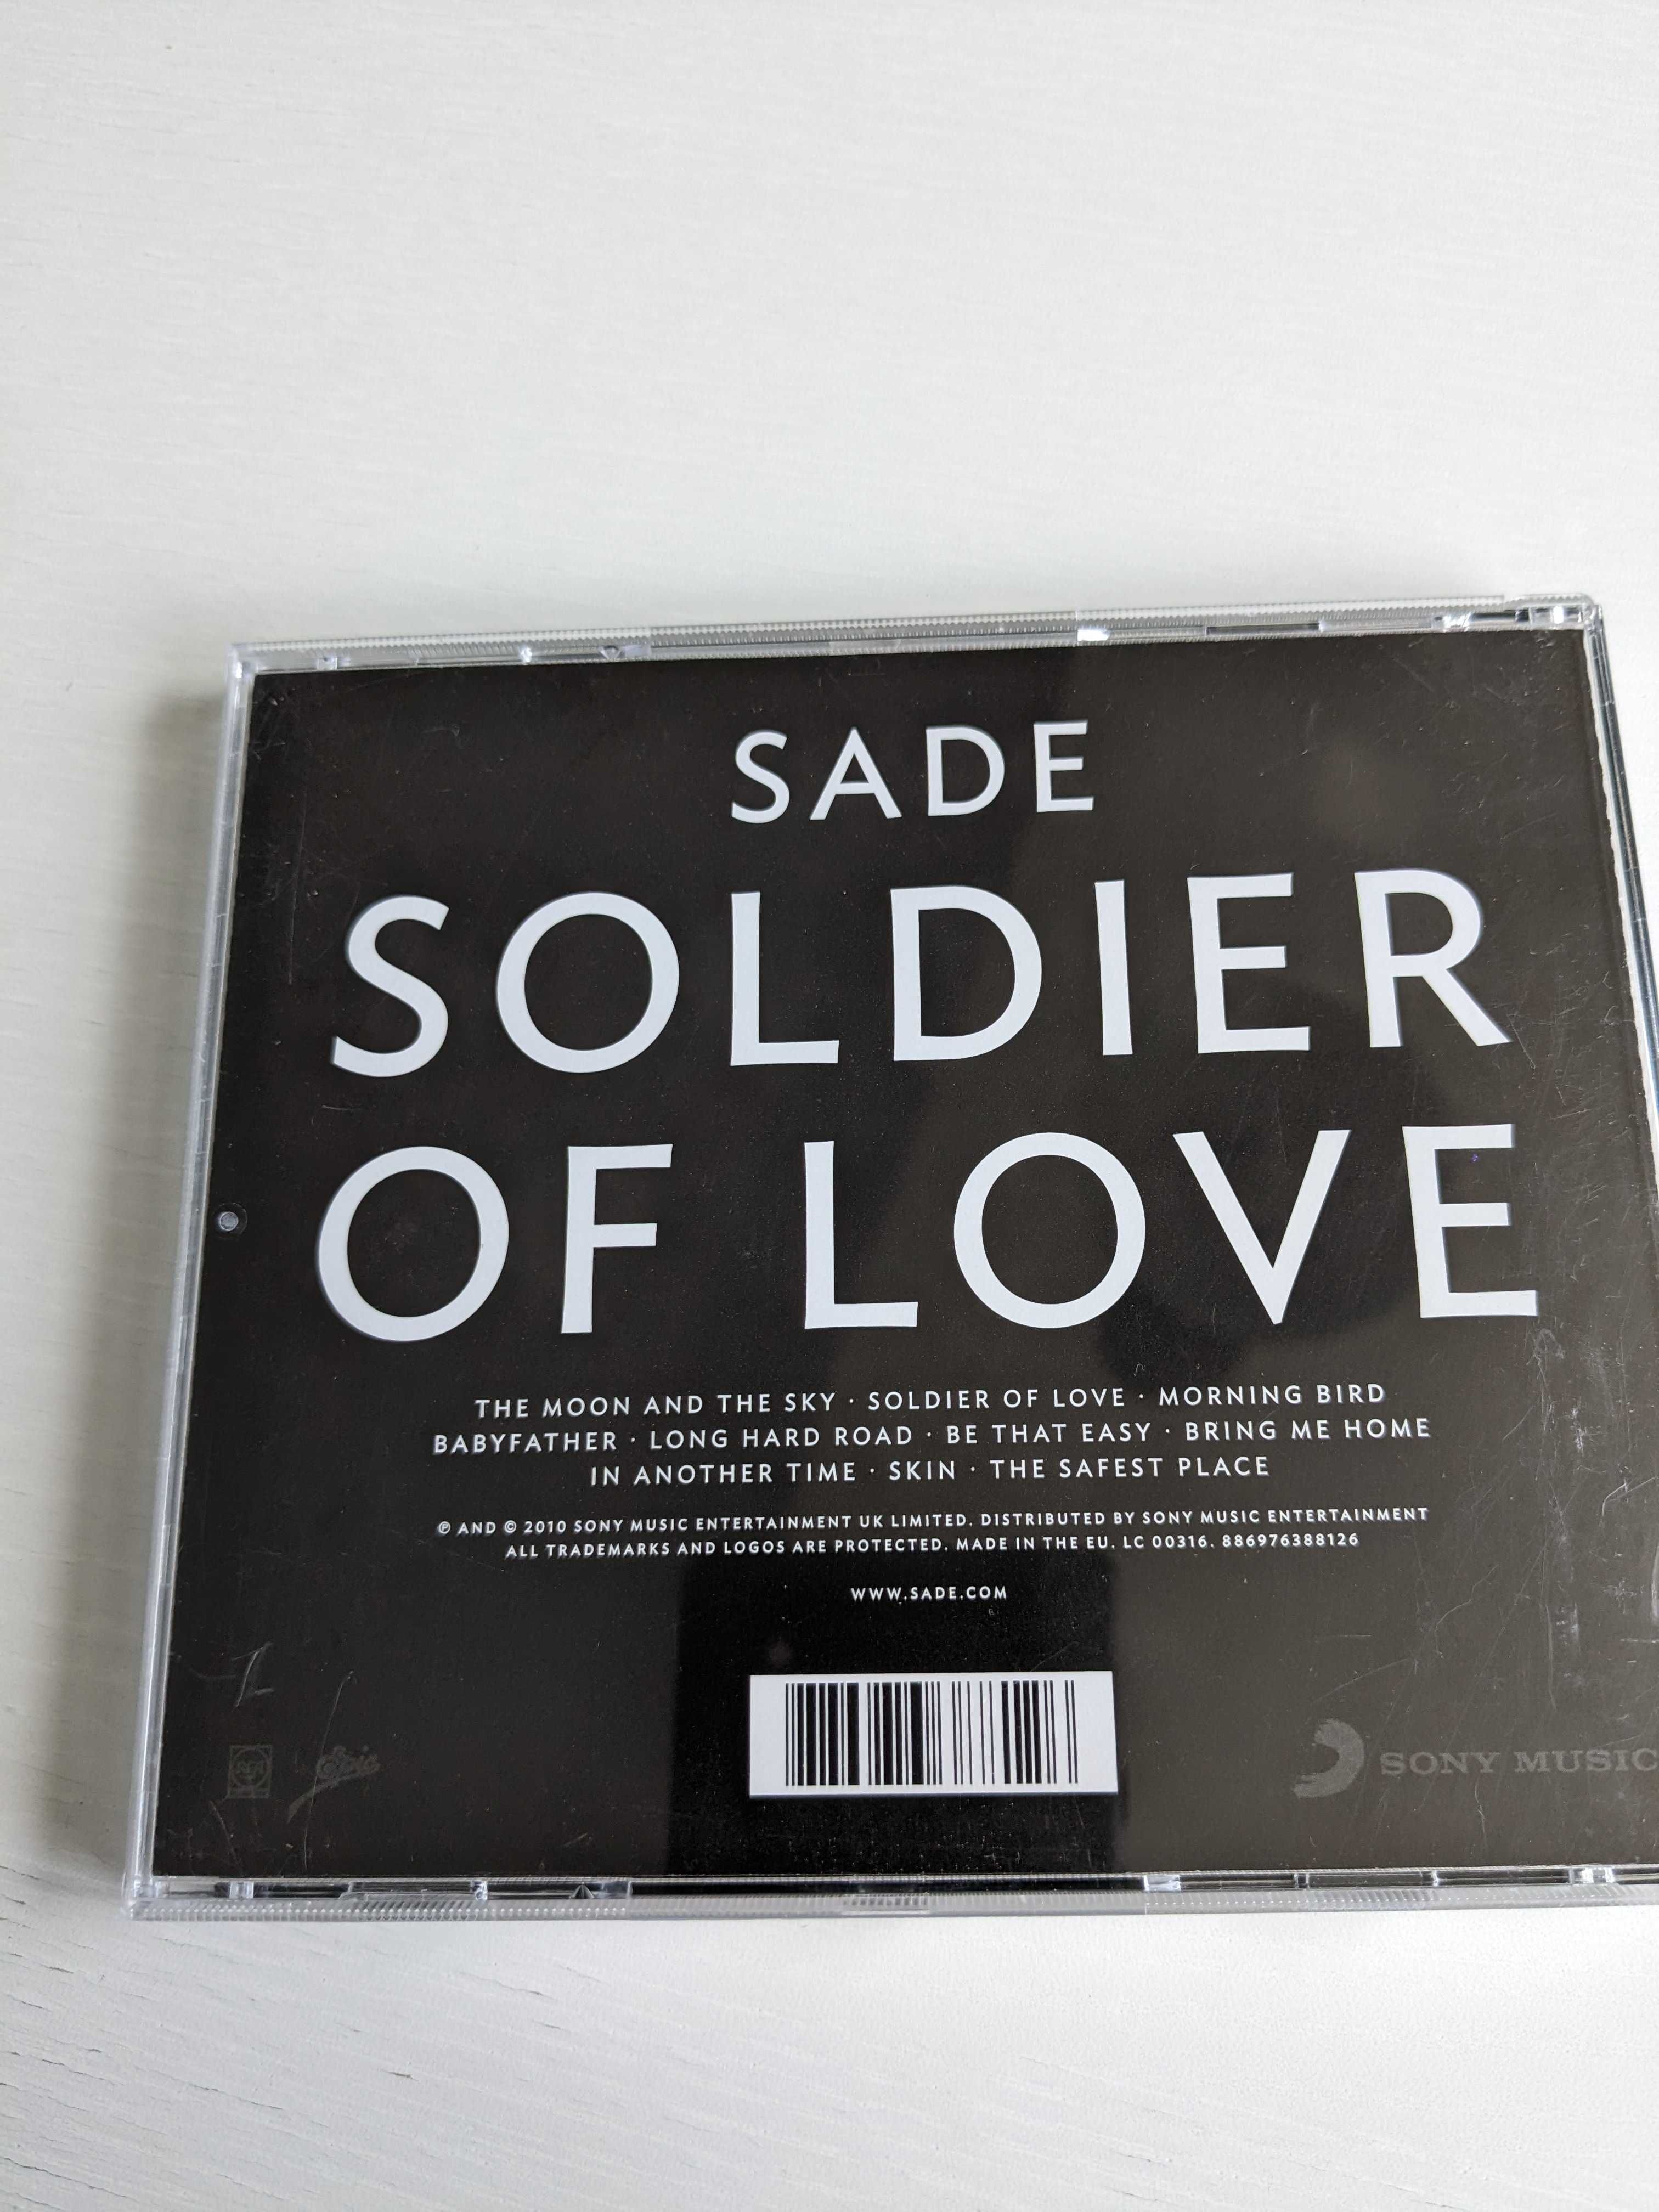 Płyta CD Sade " Soldier of love"